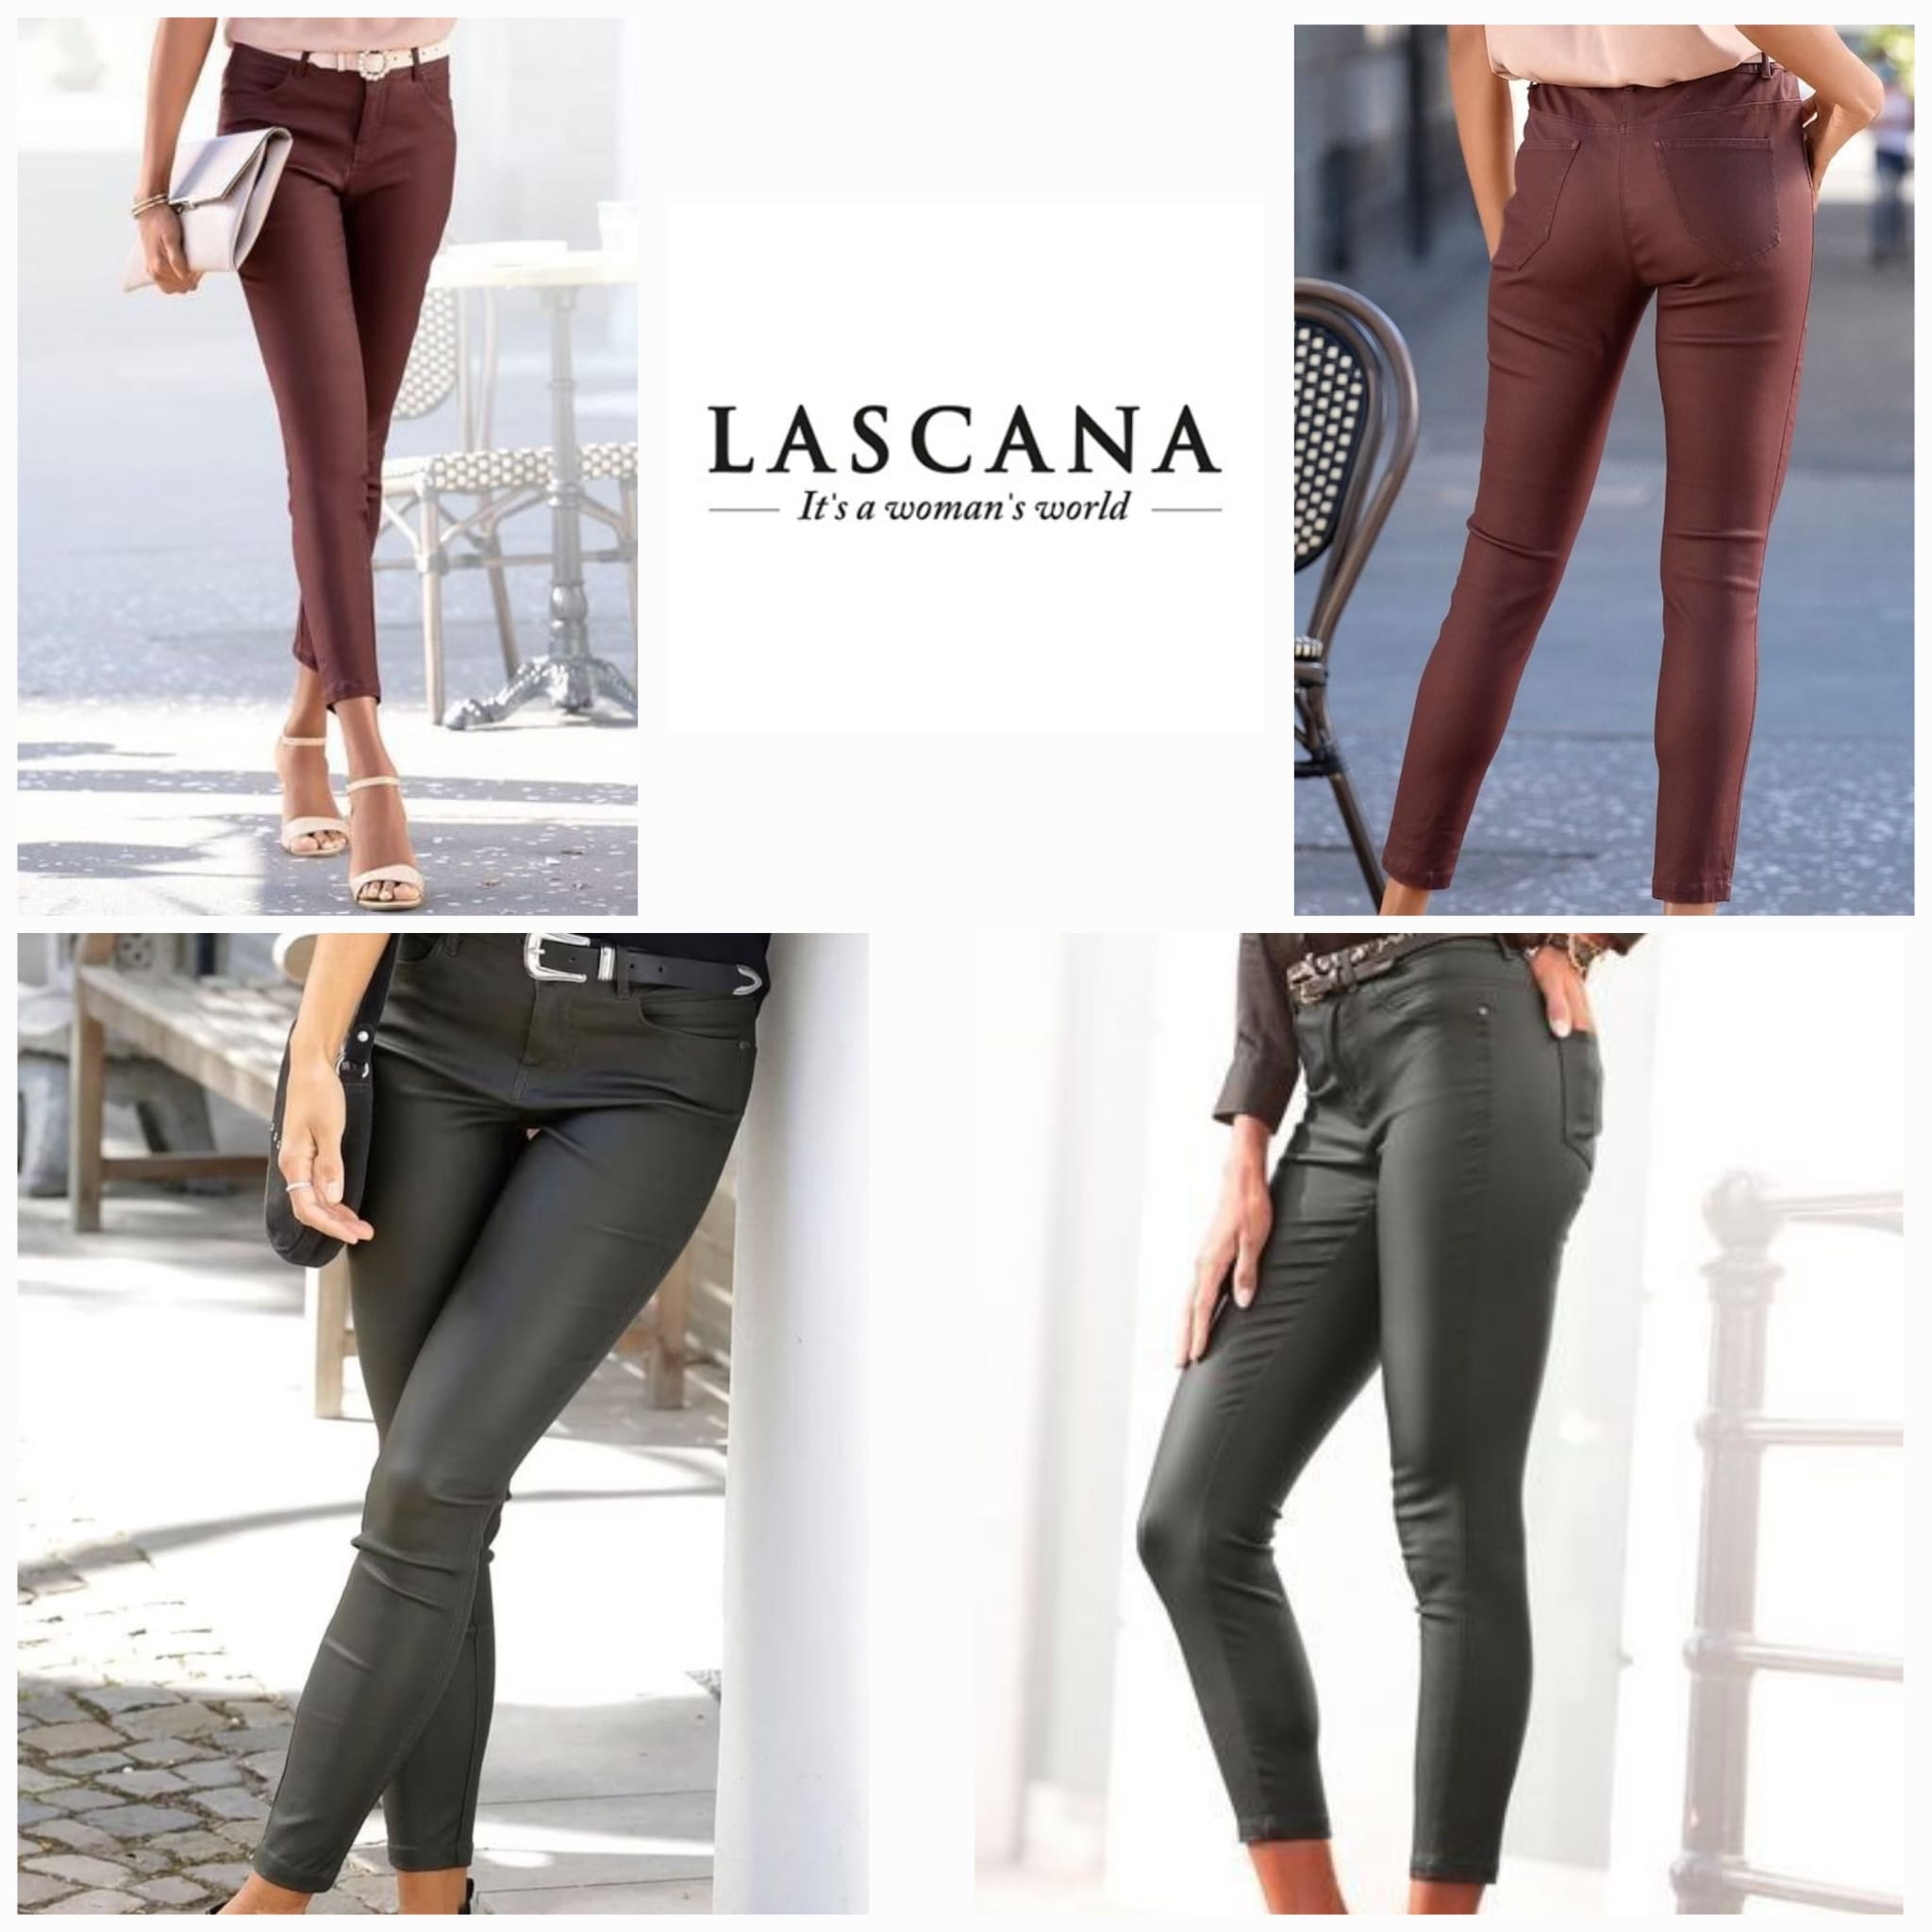 Women's skinny trousers by Lascana